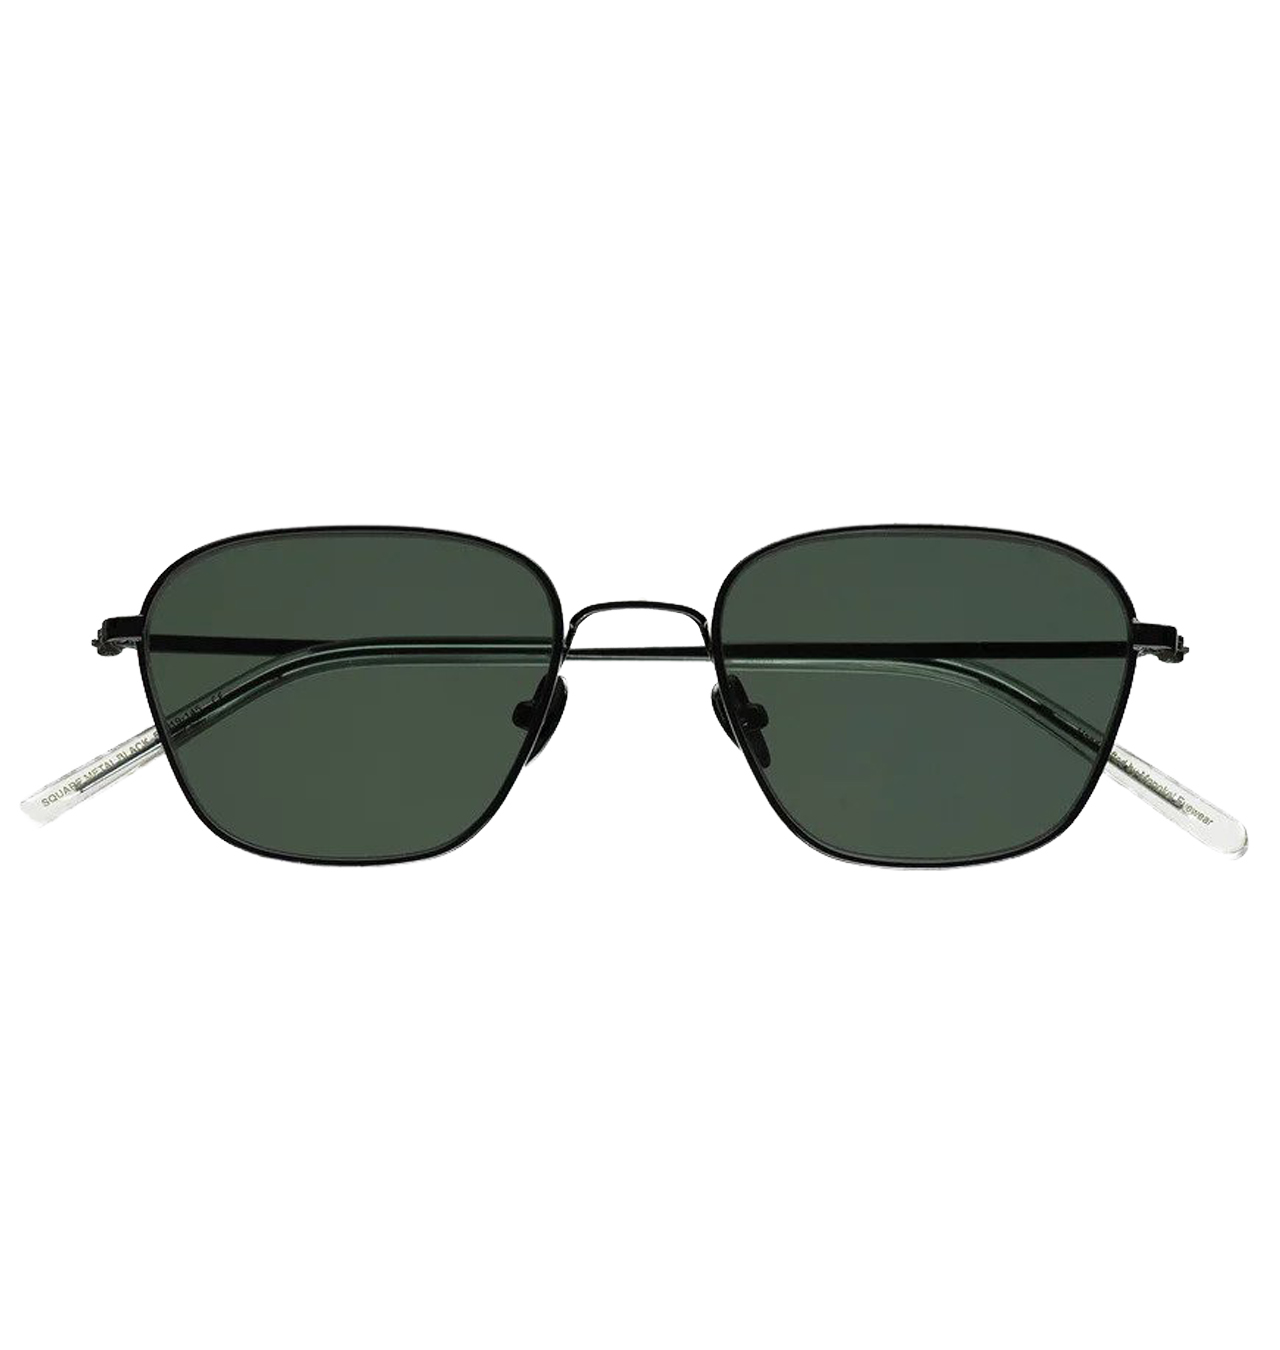 Monokel Eyewear - Otis Black Sunglasses - Green Solid Lens